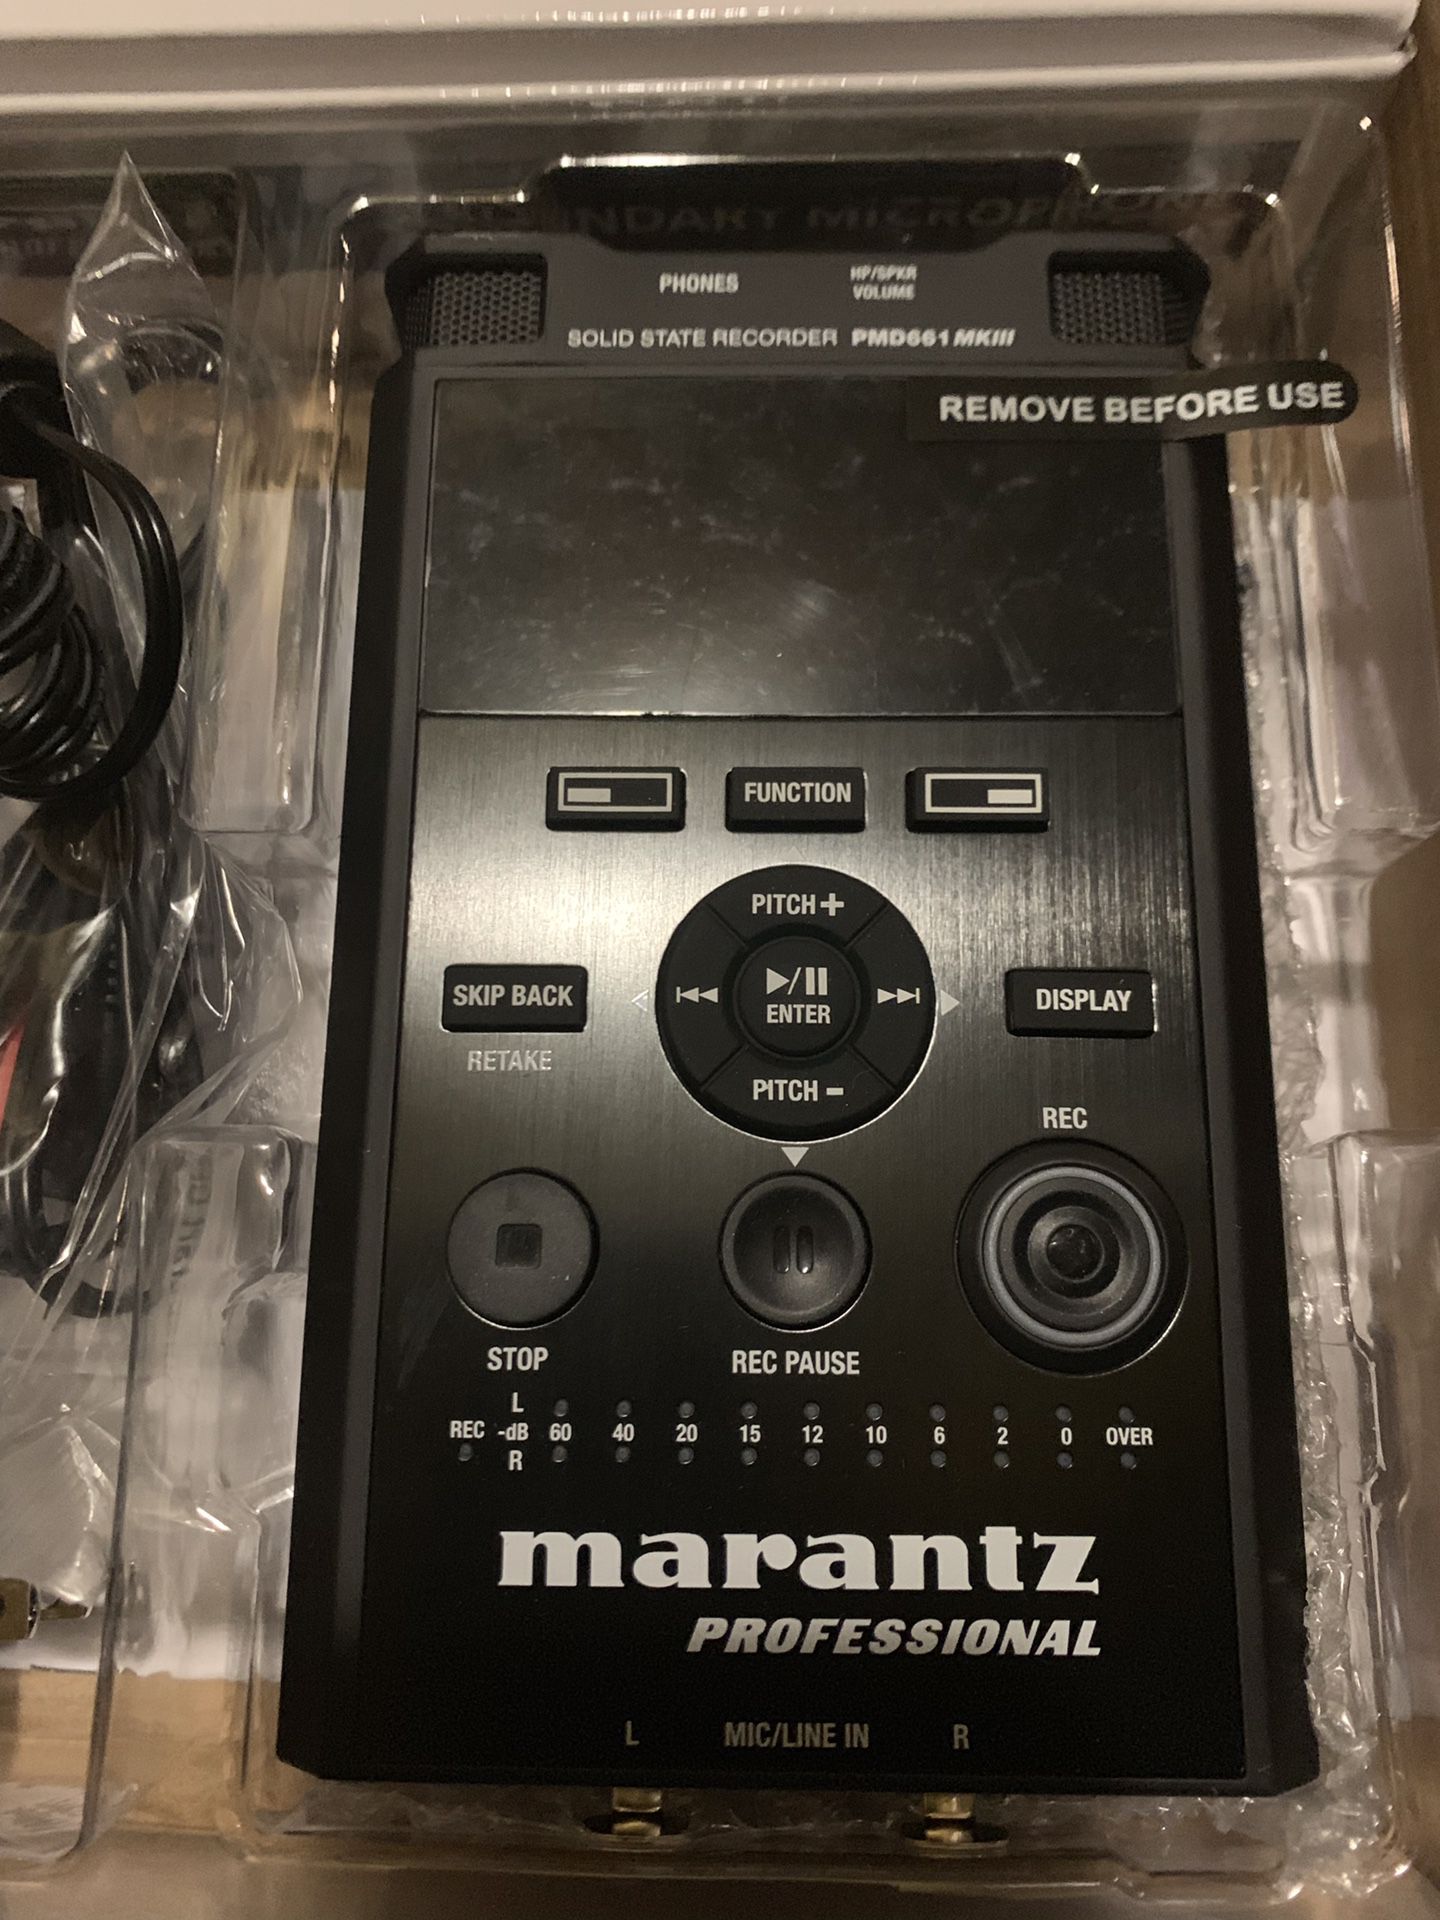 Marantz mobile recording system